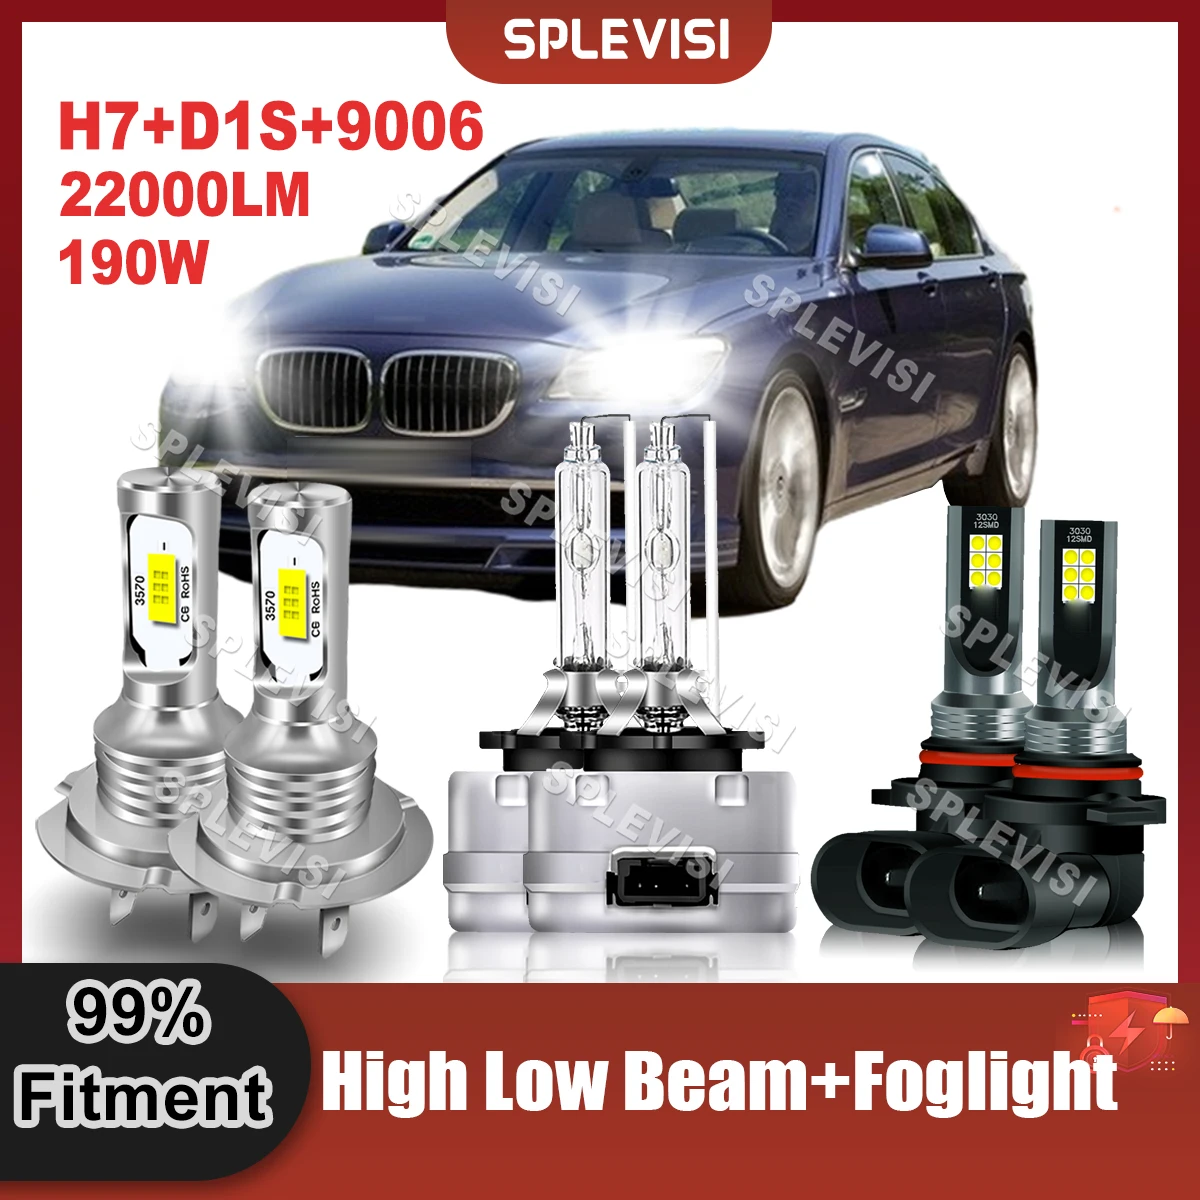 

Car Fitment LED Headlight 6000K White H7 High D1S Xenon Low Beam 9006 Foglight Combo Kit For BMW Alpina B7 2007 2008 Car Light